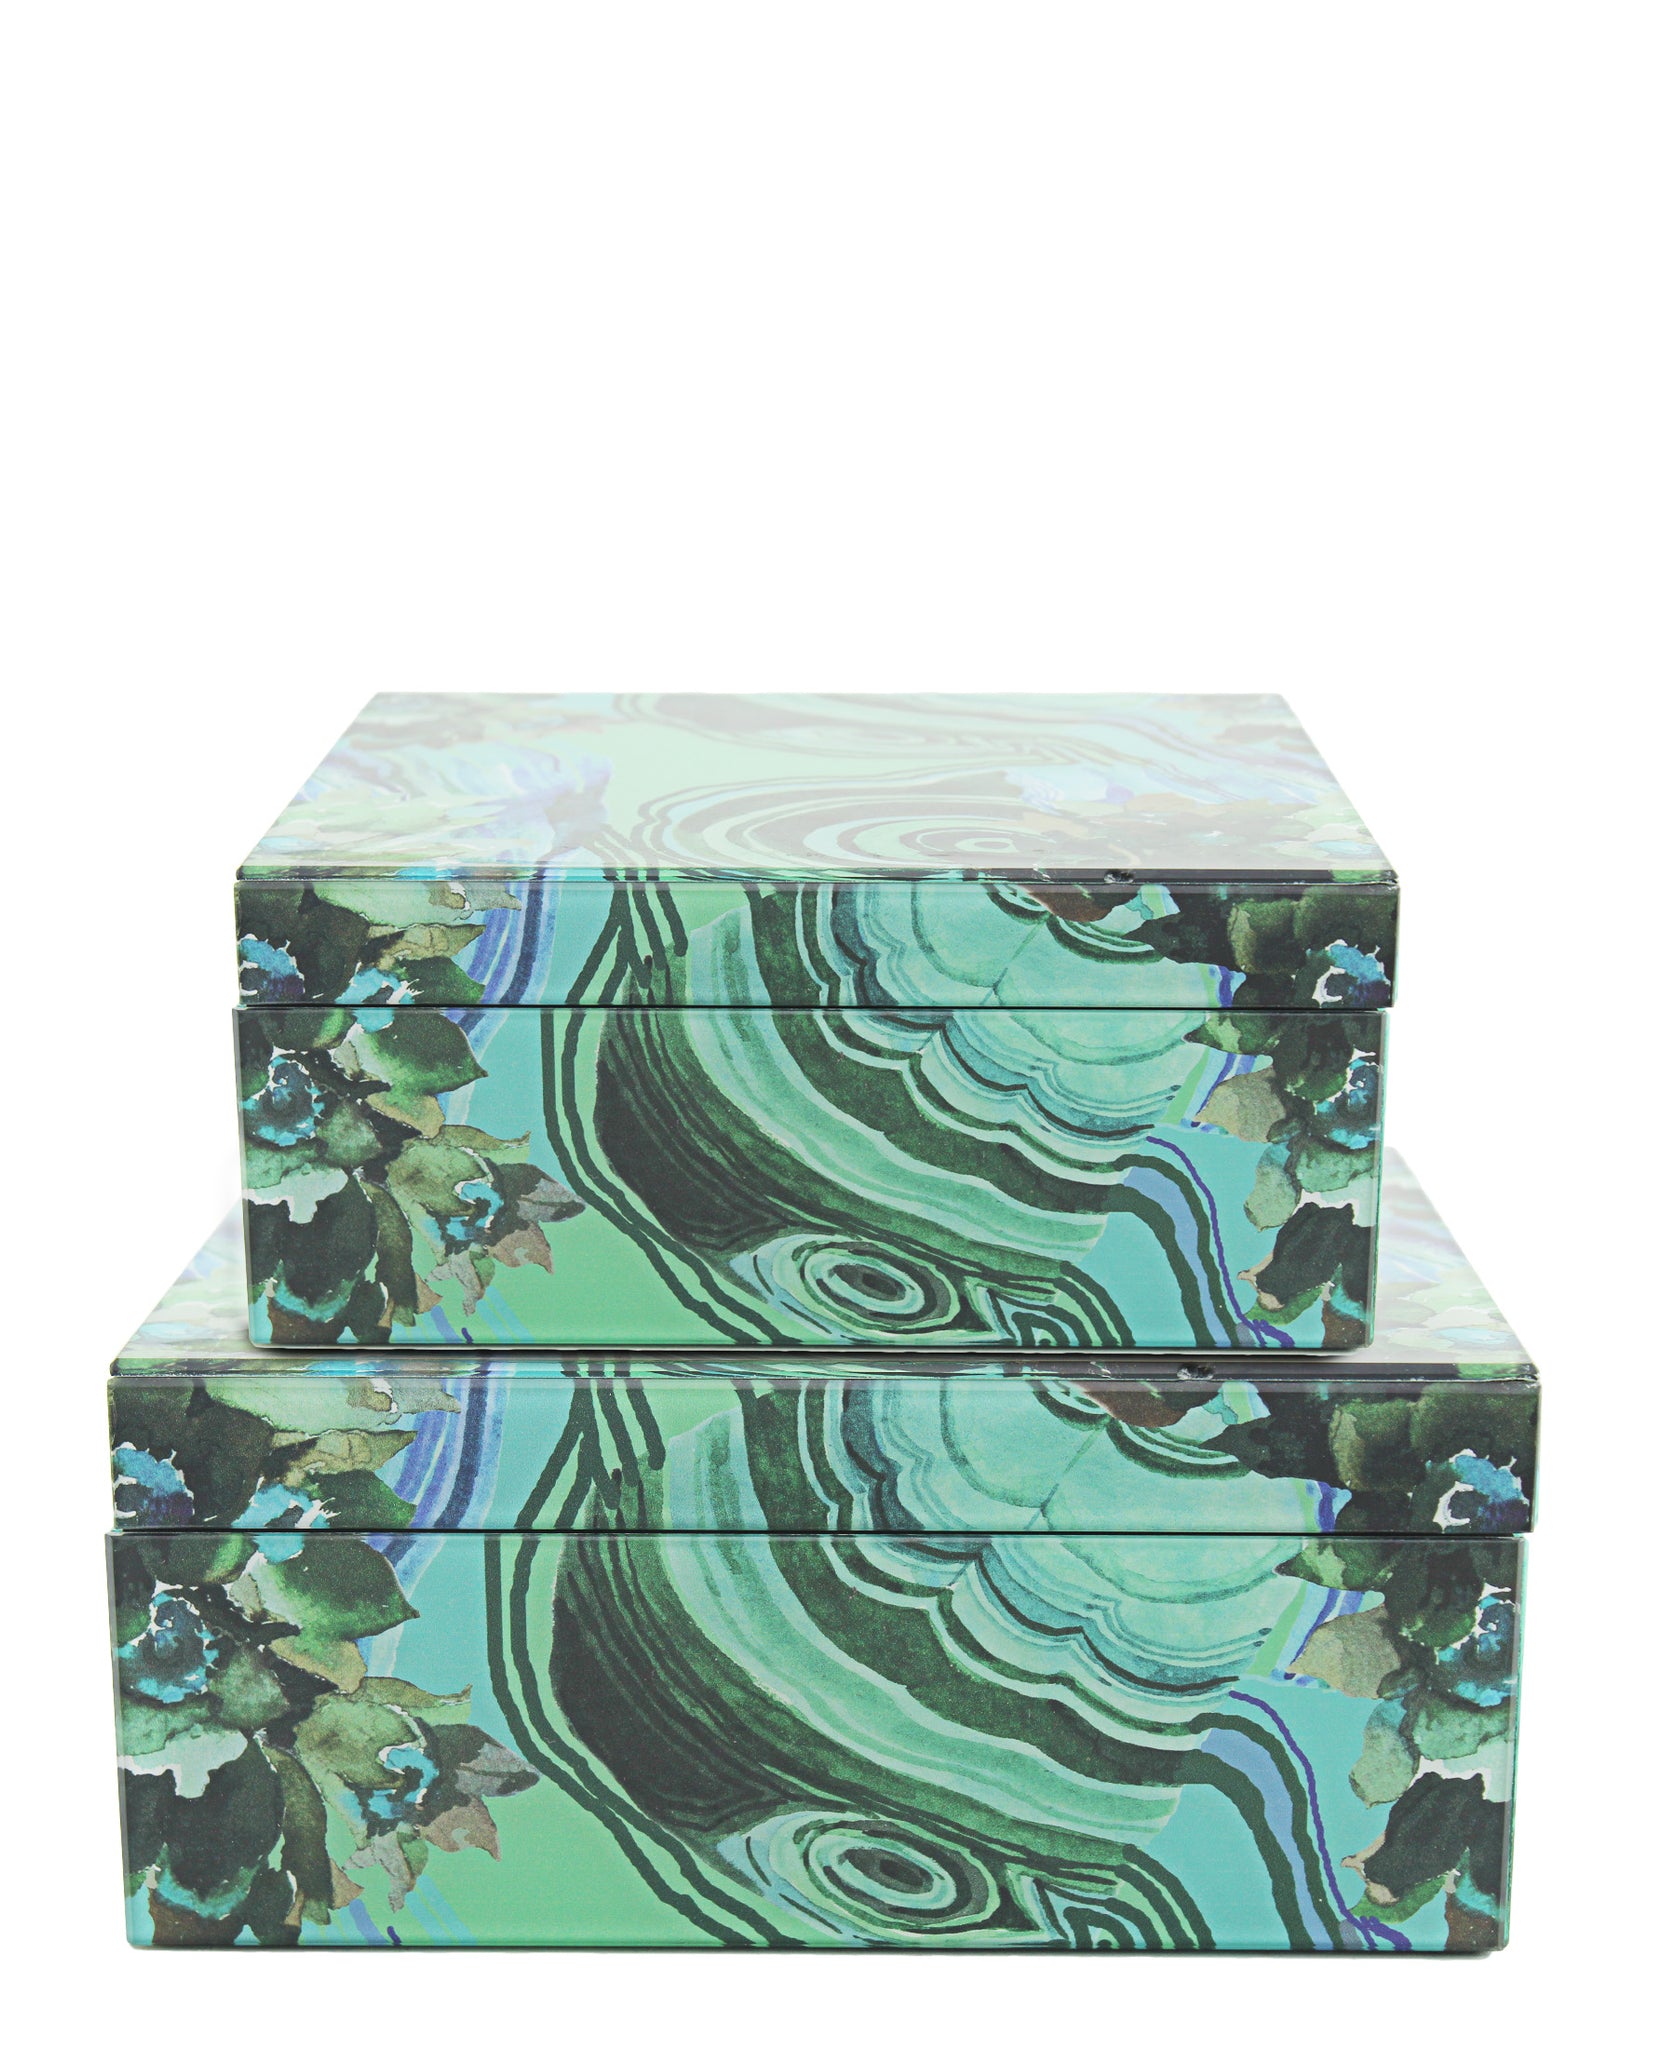 Edecor Cone Jewelry Box 2 Piece - Blue